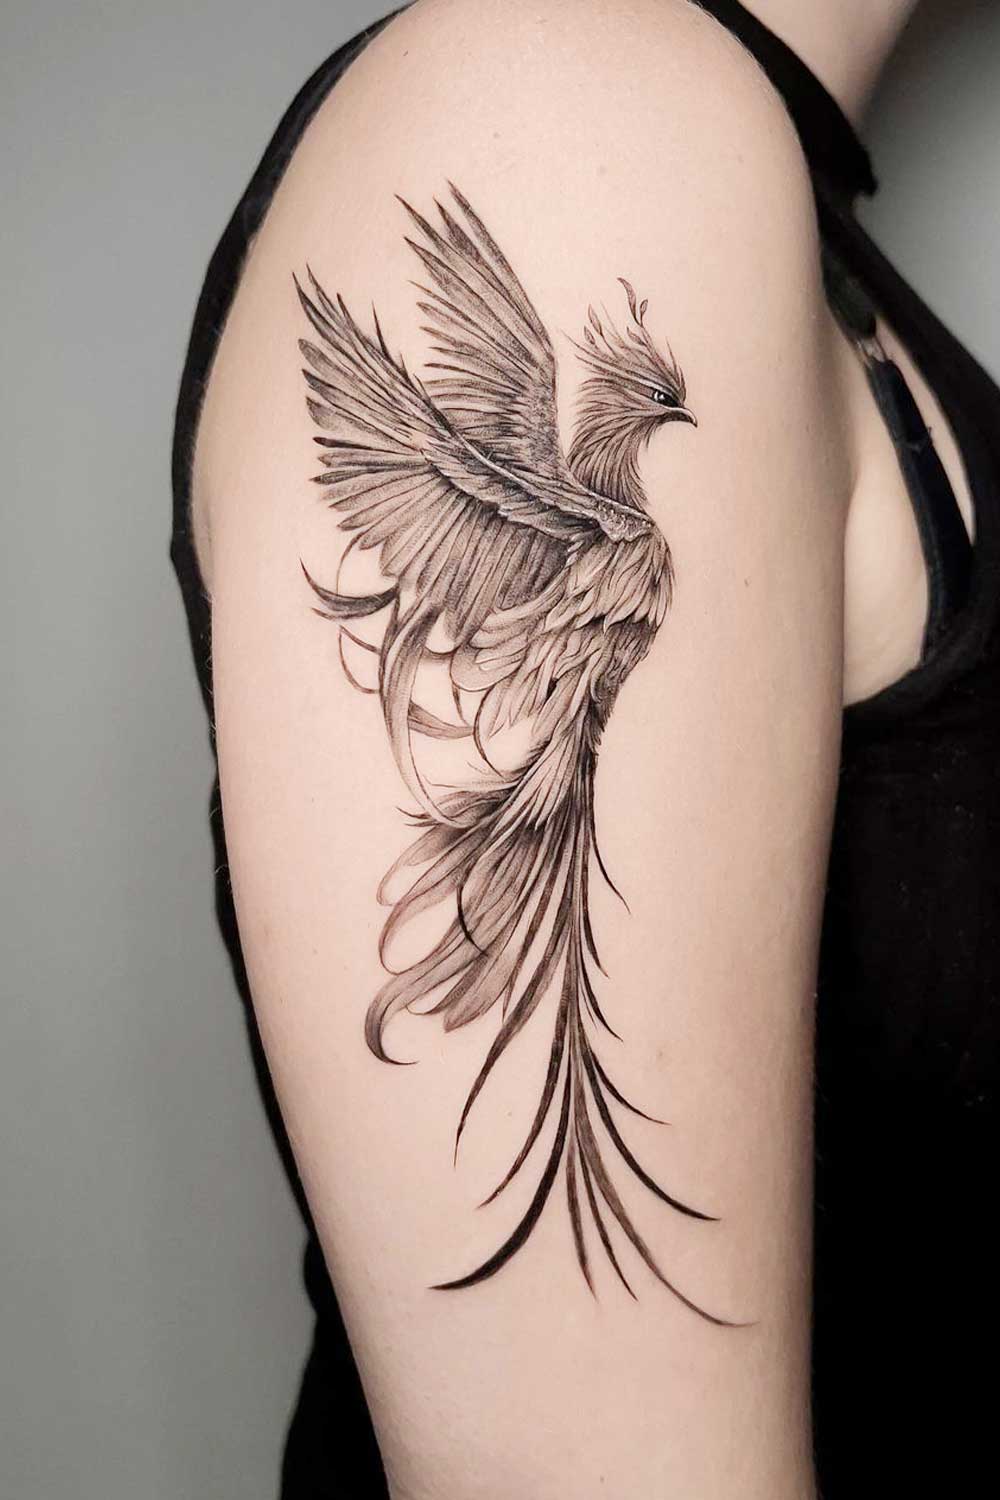 Nice phoenix tattoo design in fire colors